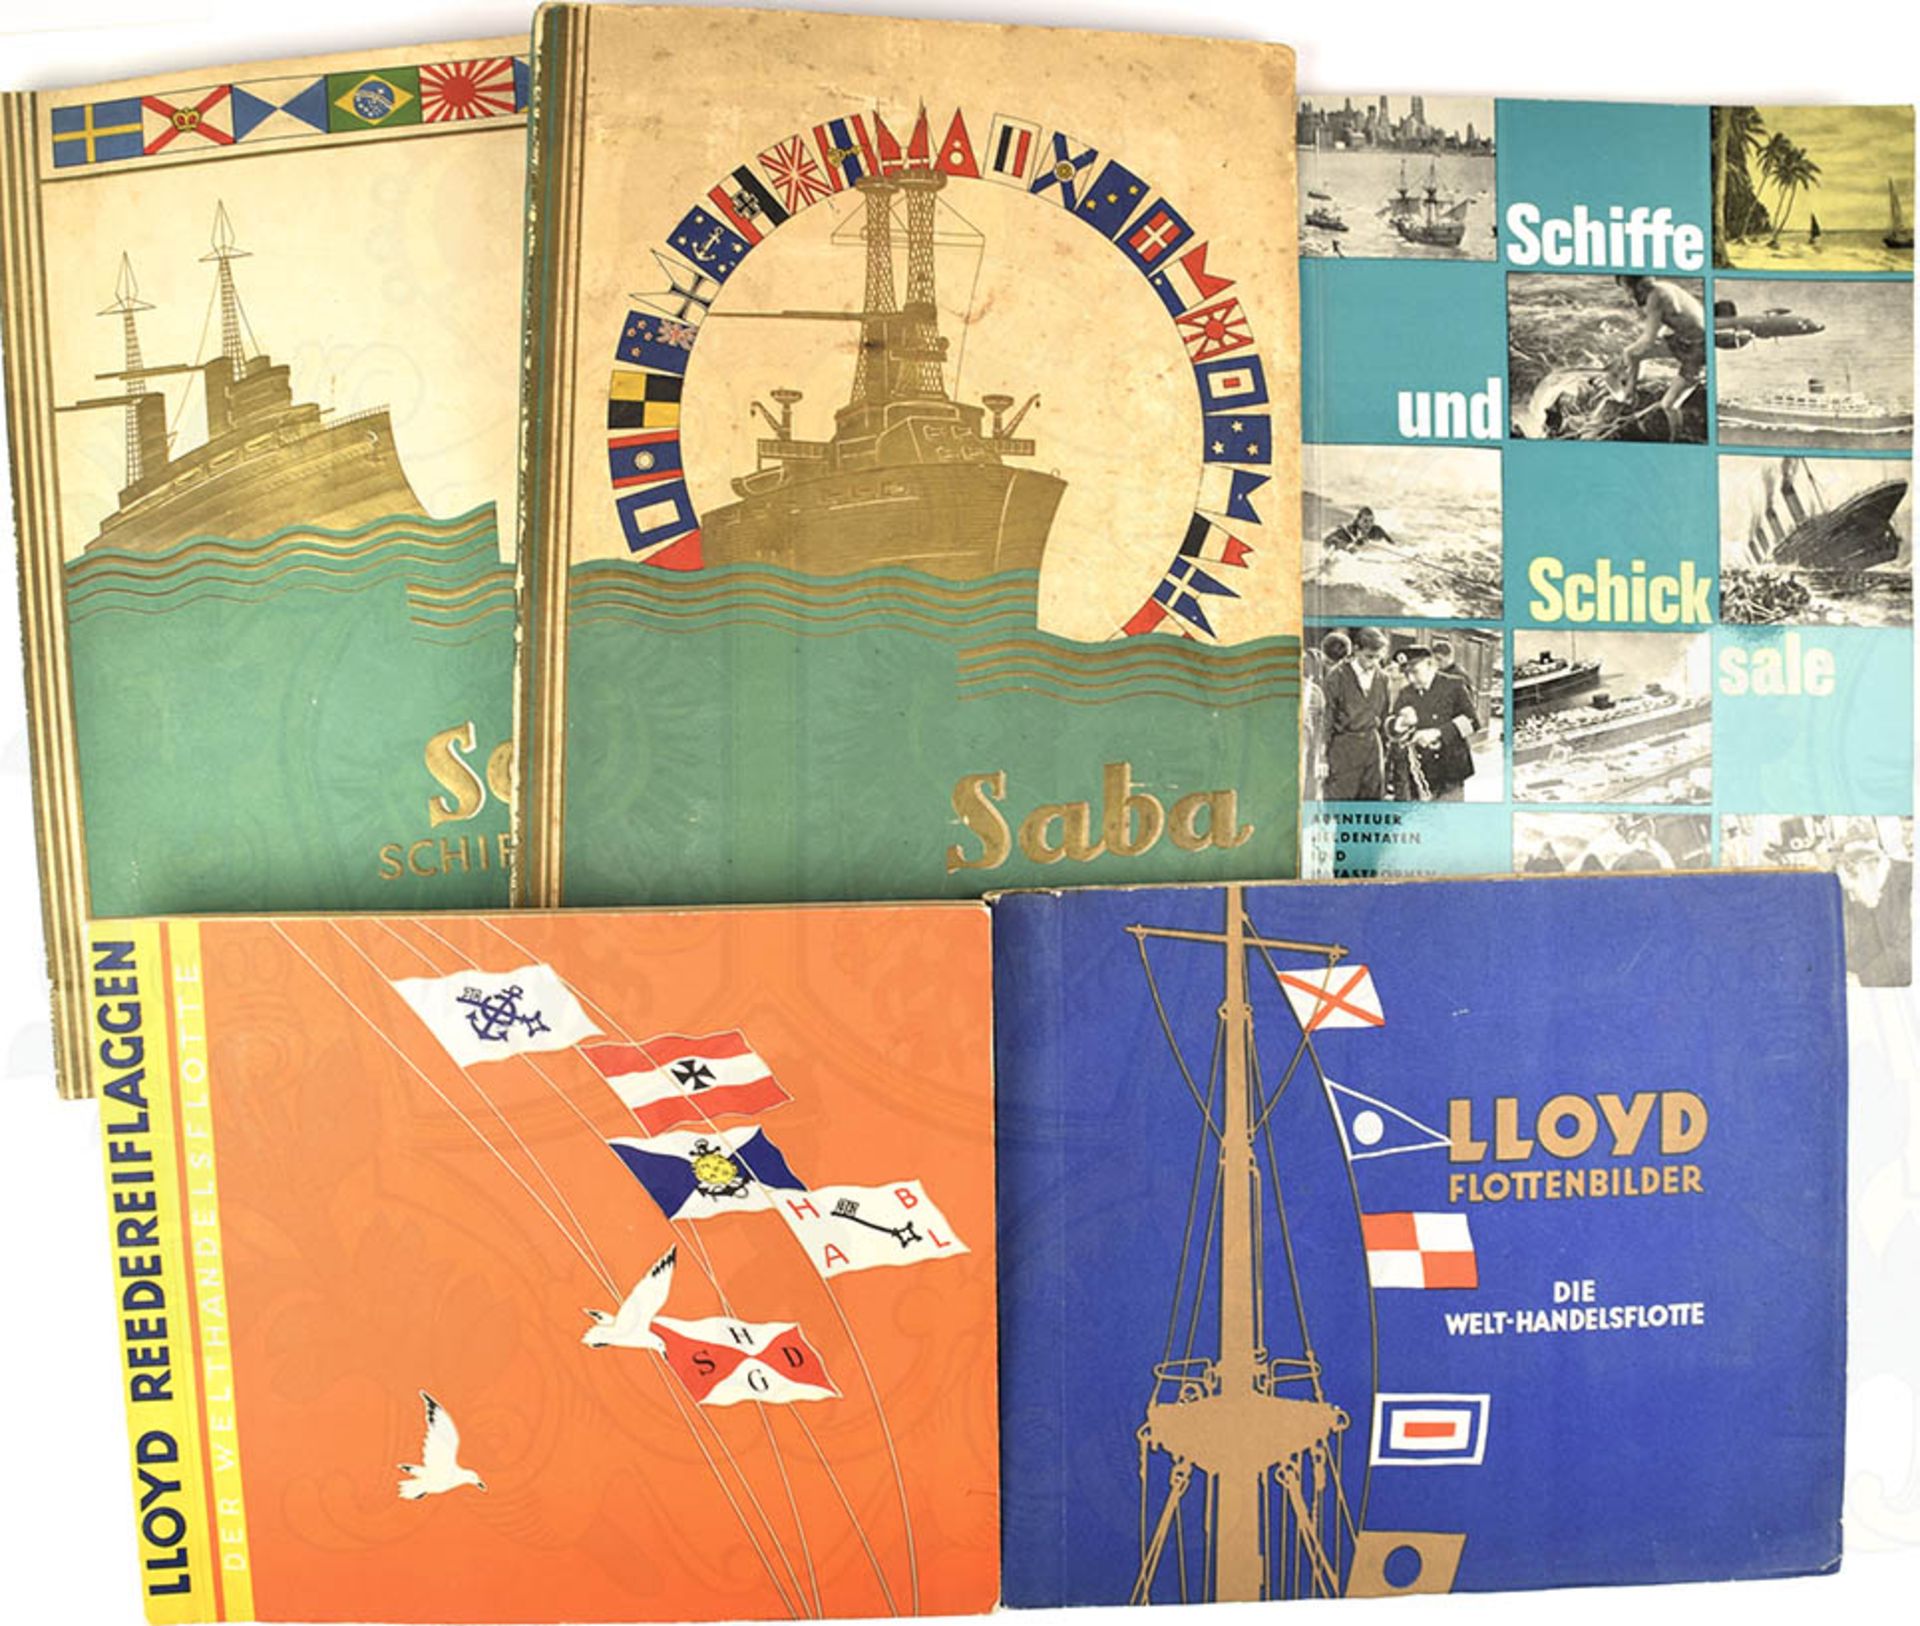 KONVOLUT SCHIFFAHRT UND MARINE: "Lloyd Flottenbilder"; "Lloyd Reedereiflaggen"; "Saba